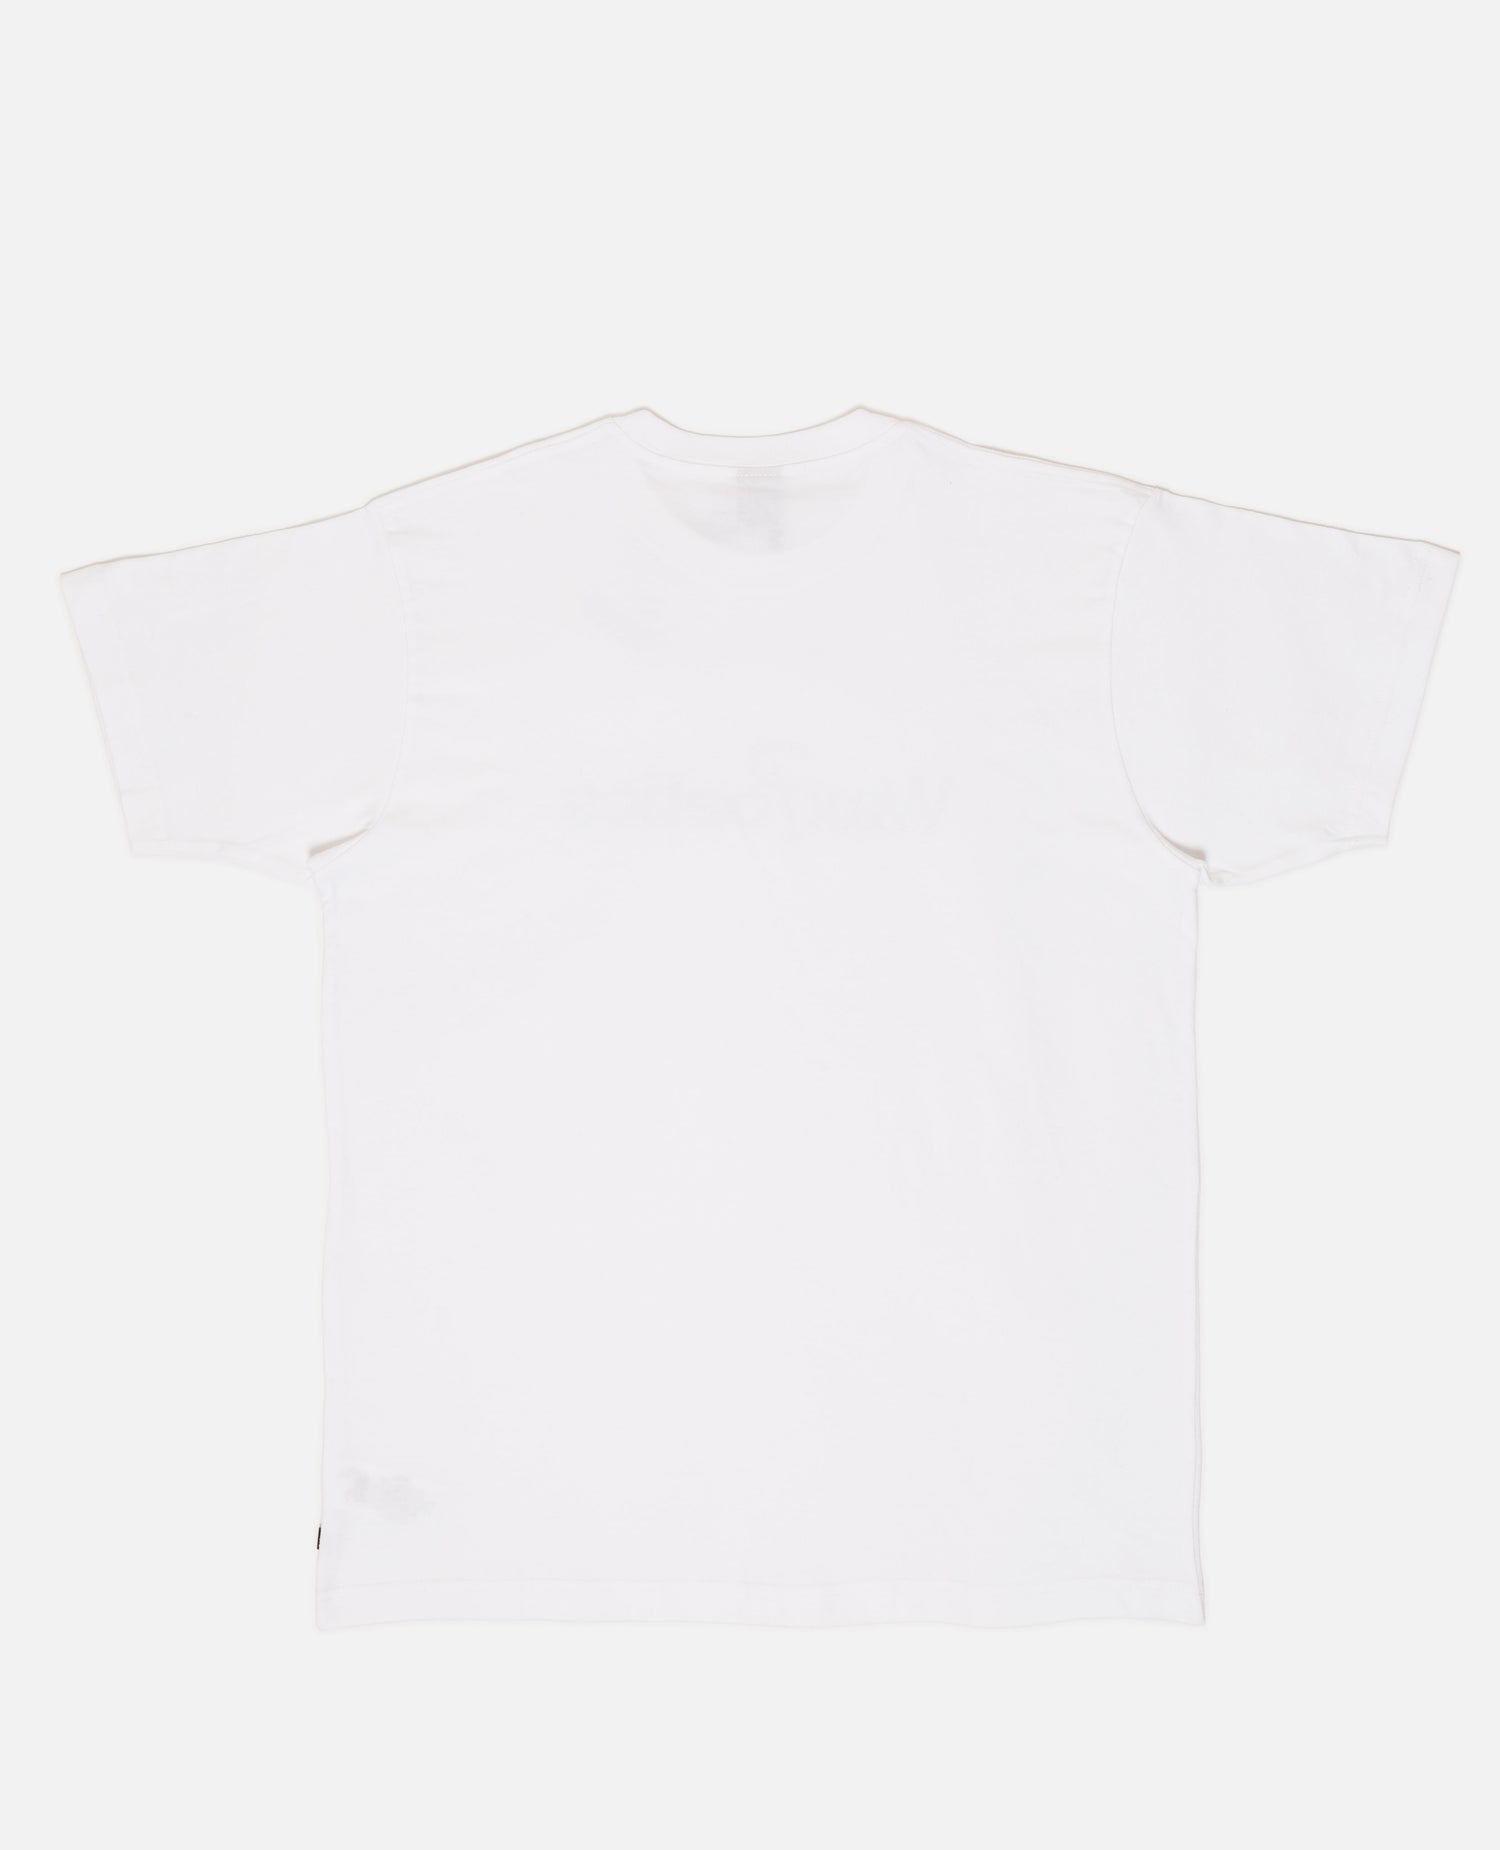 Patta Soundsystem x Wax Poetics T-Shirt (White/3M Reflective)